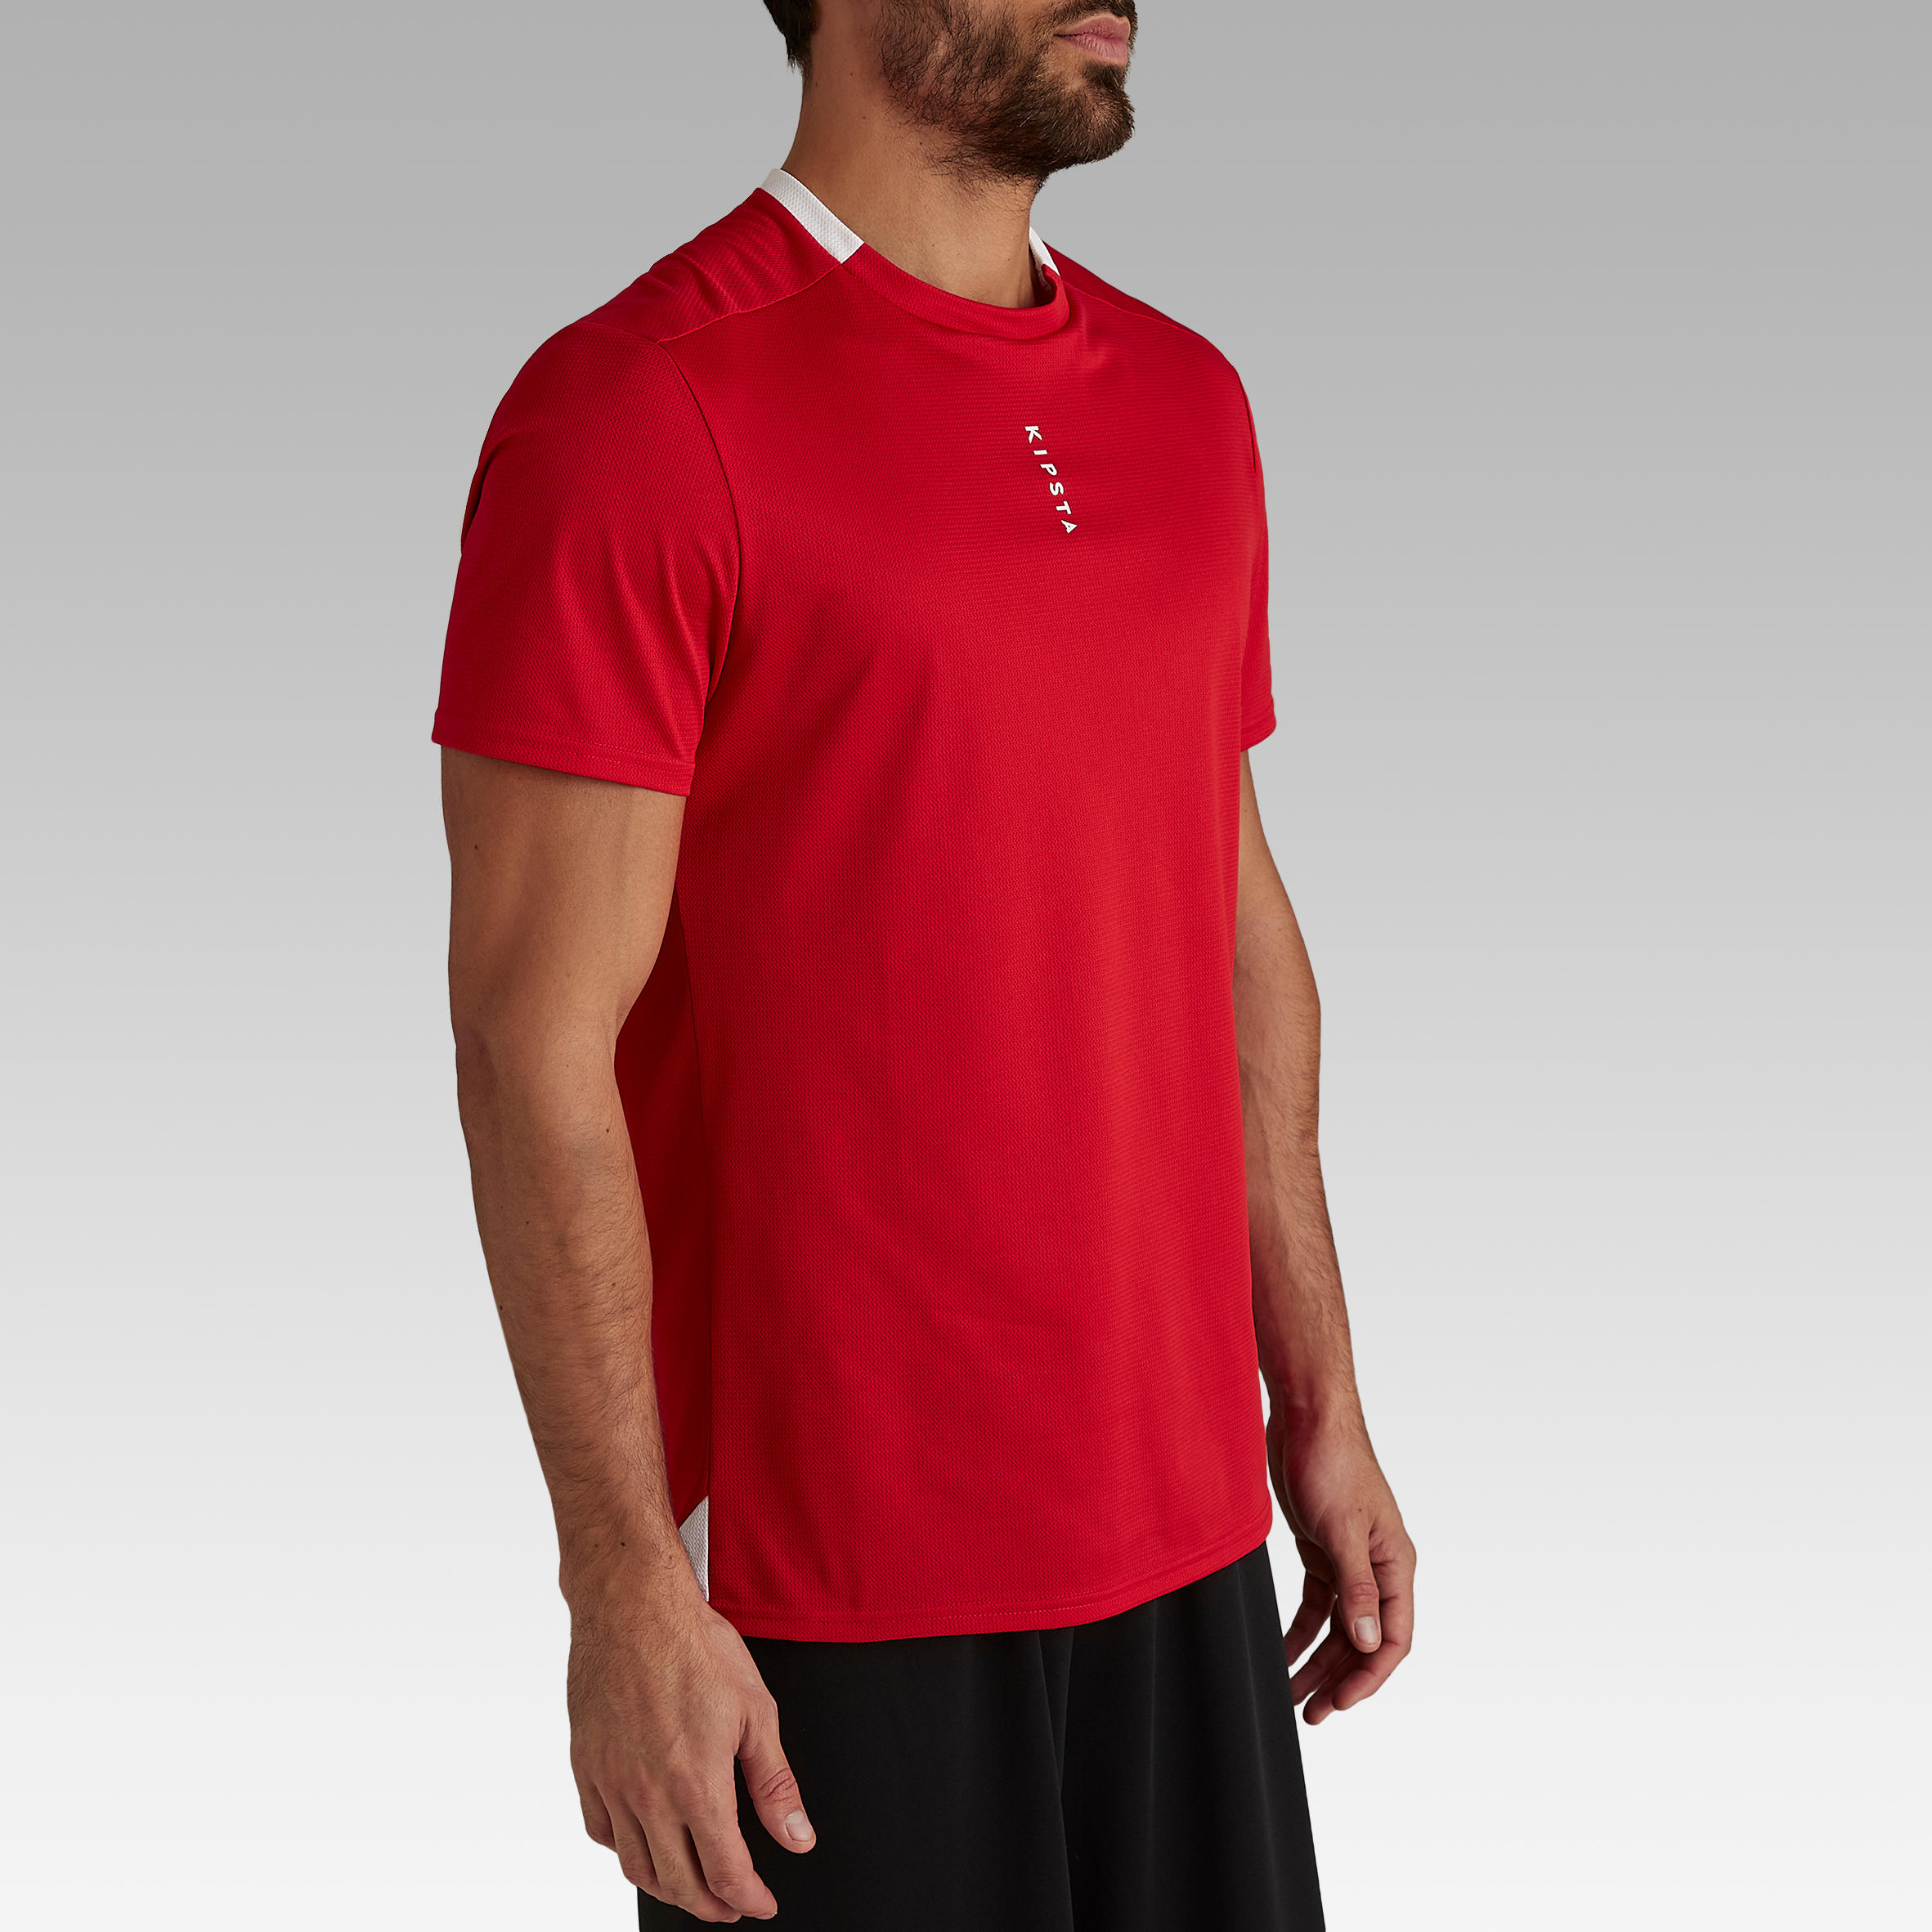 Soccer Shirt - Essential 100 - Scarlet red, Snow white - Kipsta - Decathlon